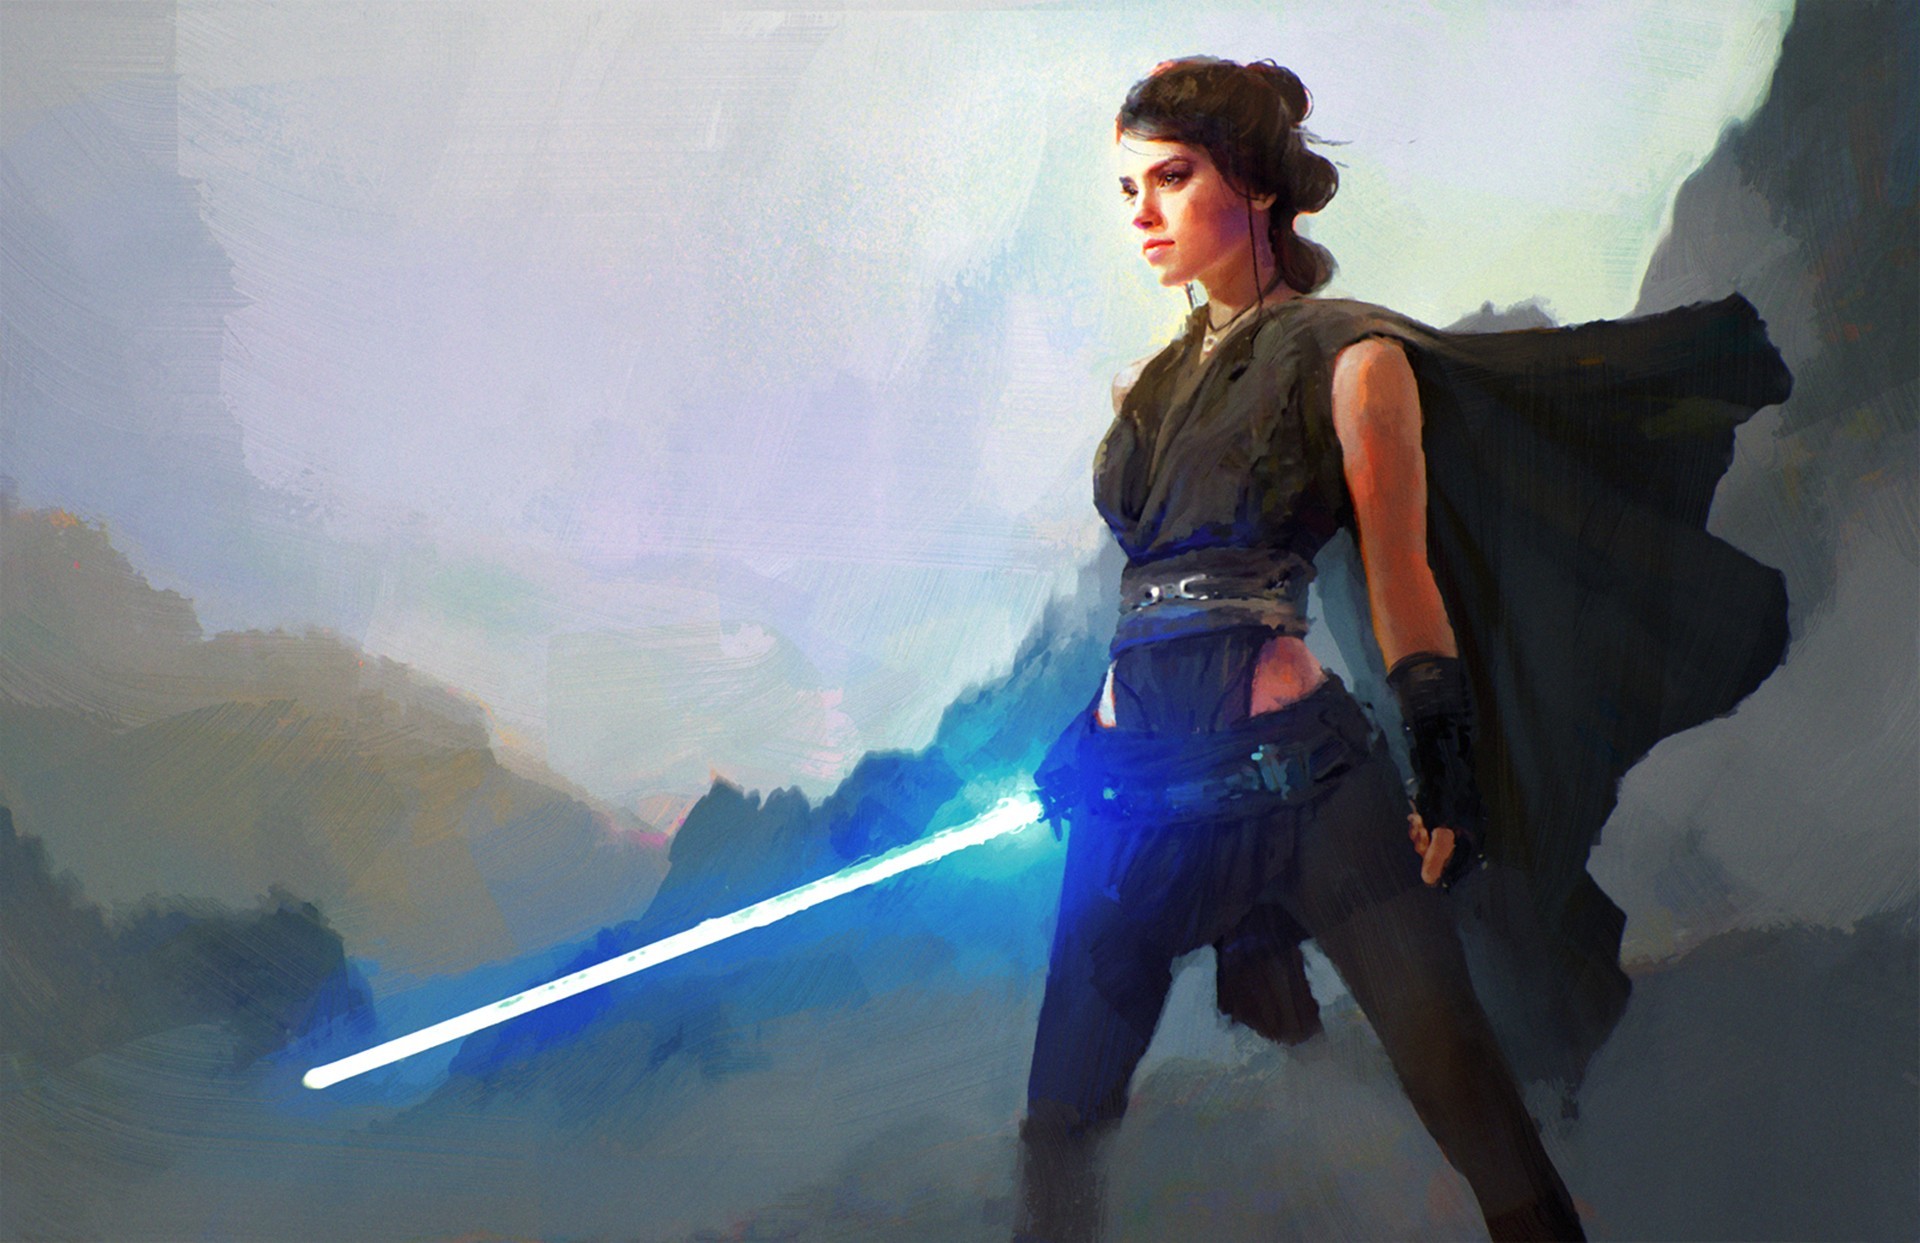 General Star Wars women artwork fantasy art science fiction Jedi  lightsaber Rey Daisy Ridley